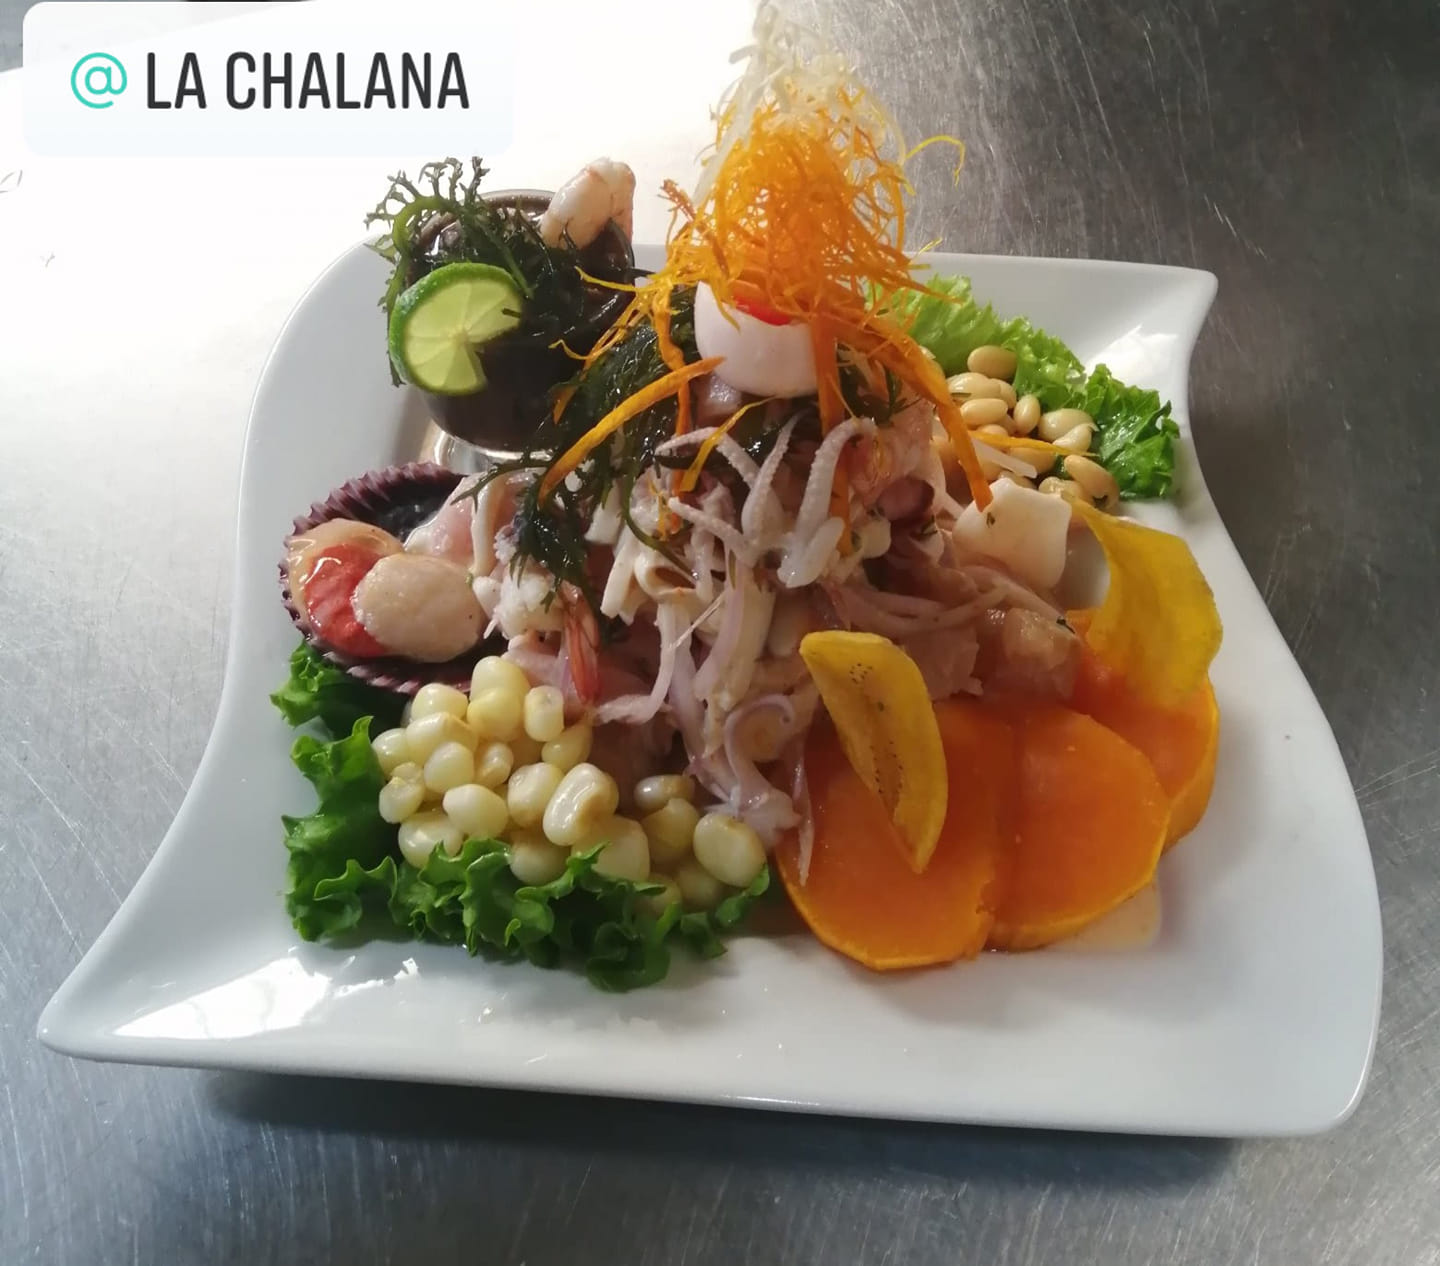 LA CHALANA – Restaurant Cevichería